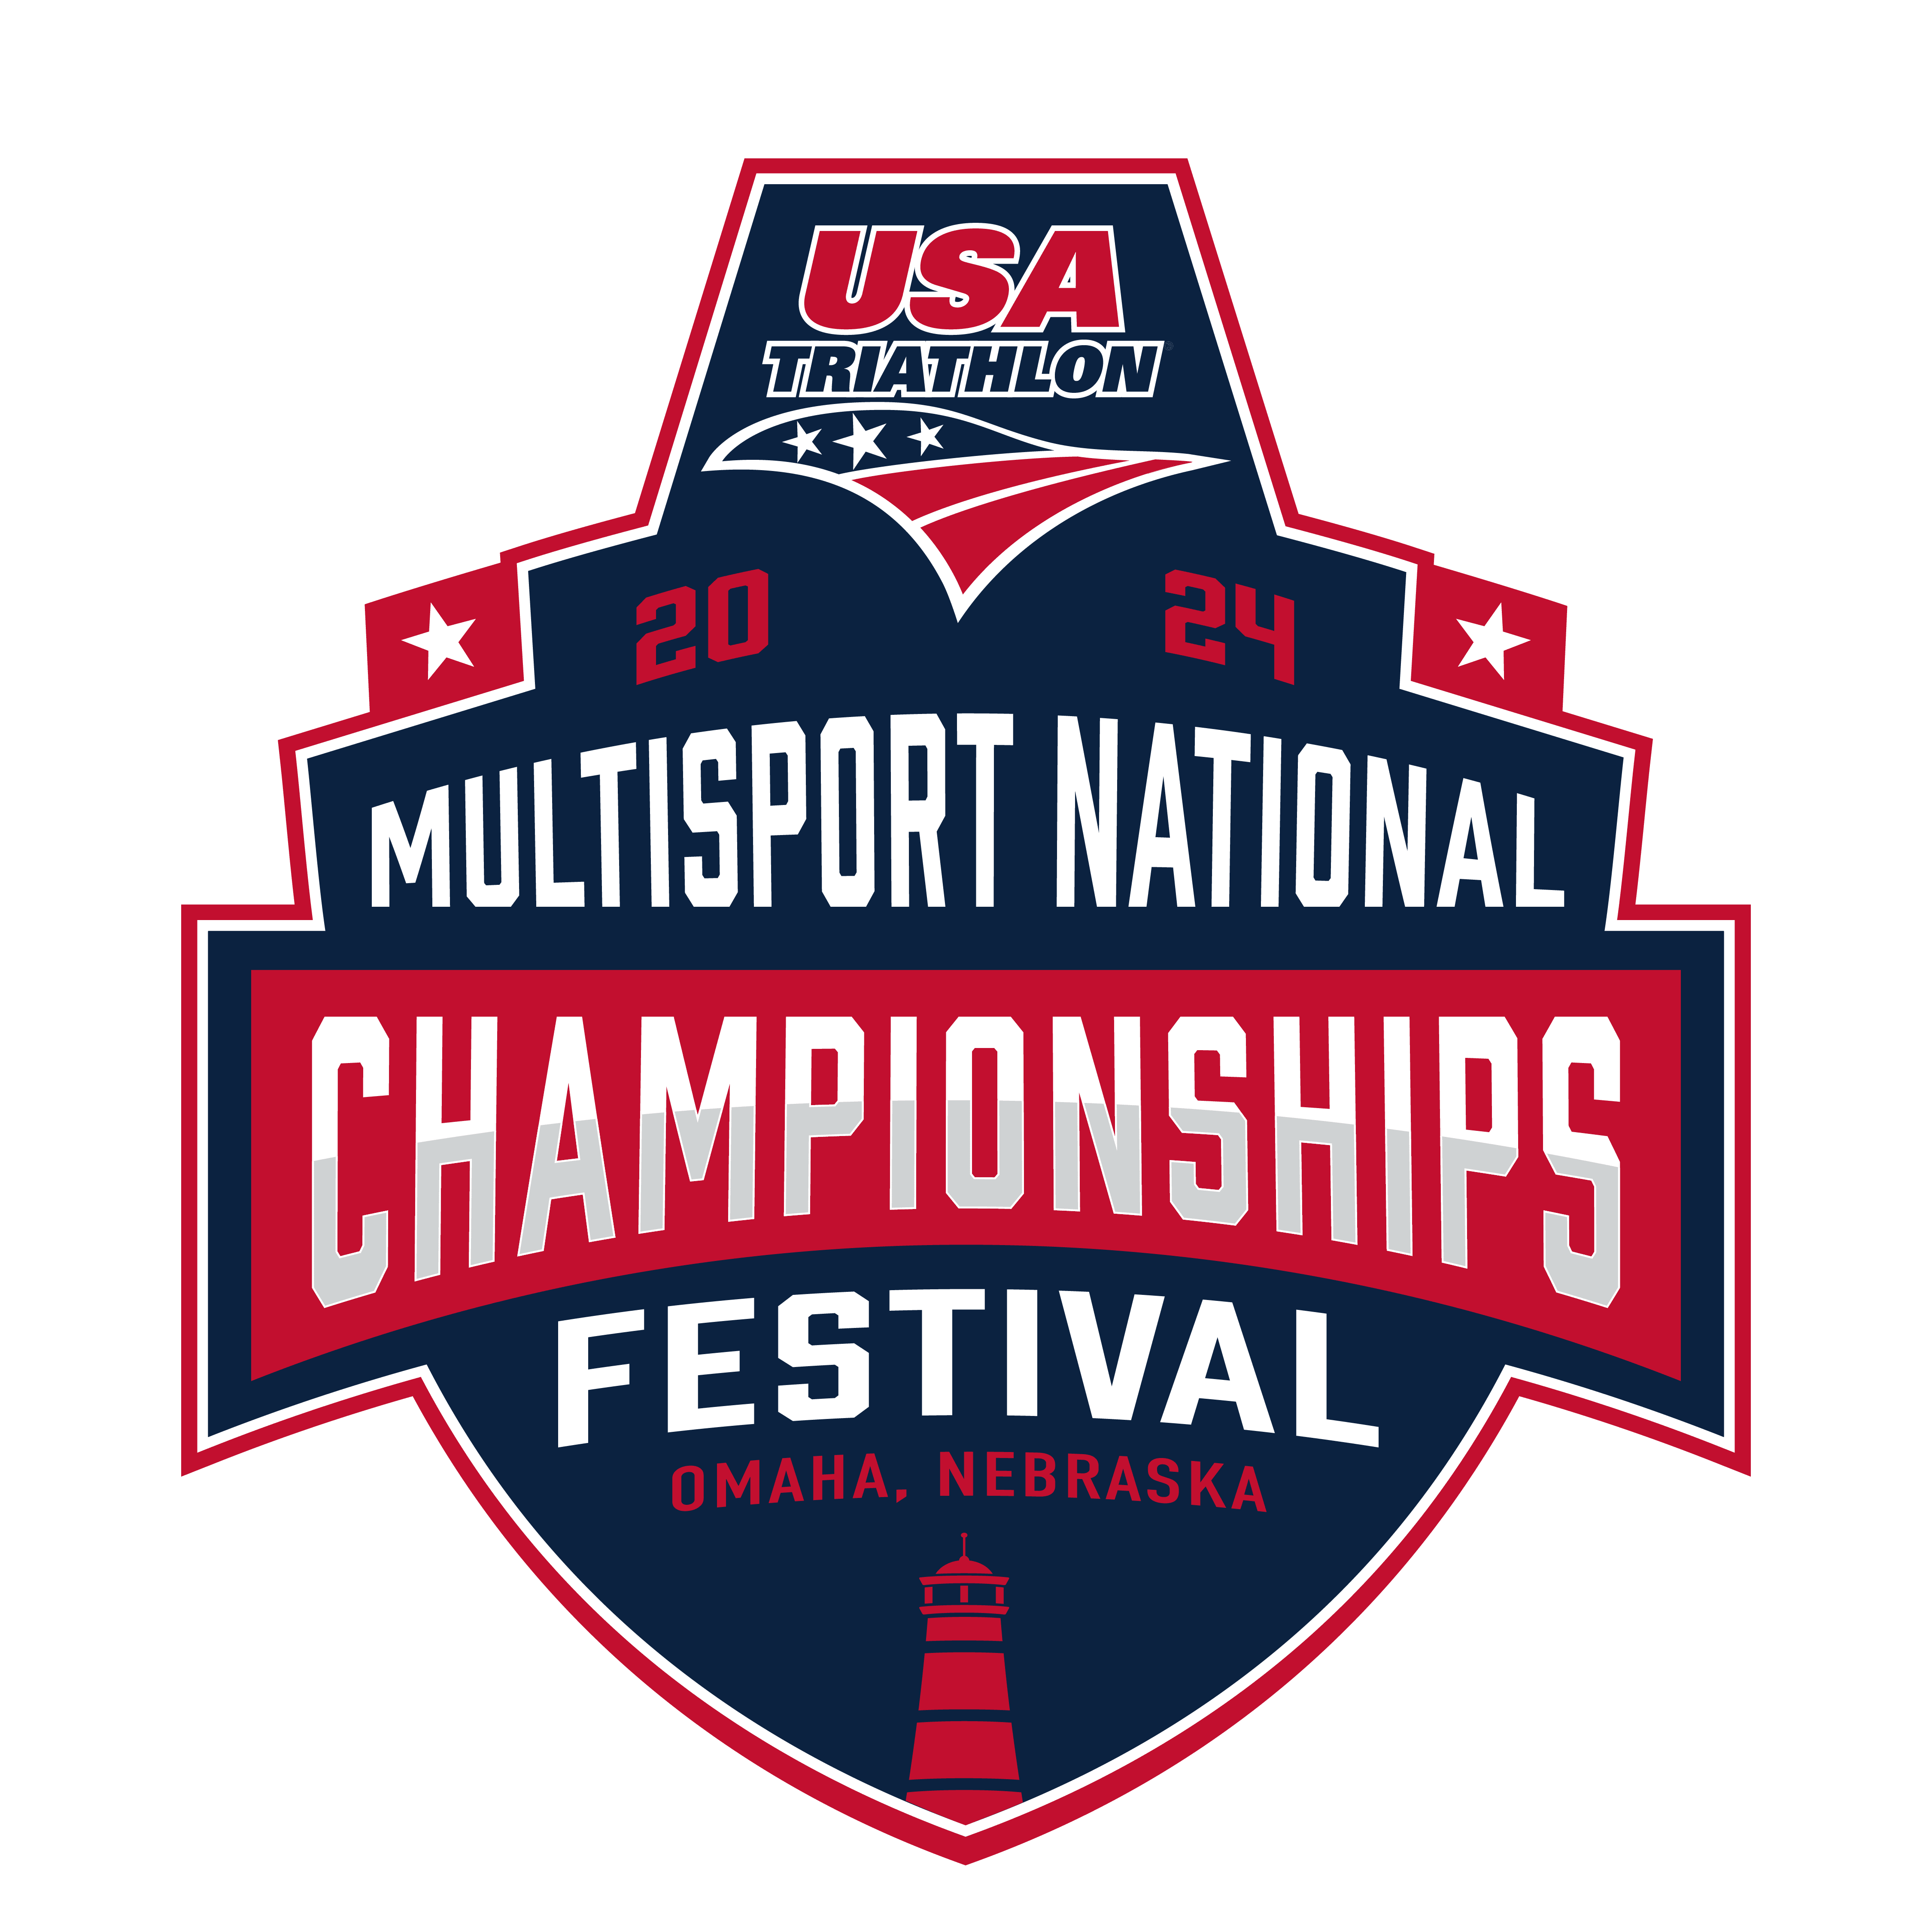 USA Triathlon Multisport National Championships Festival